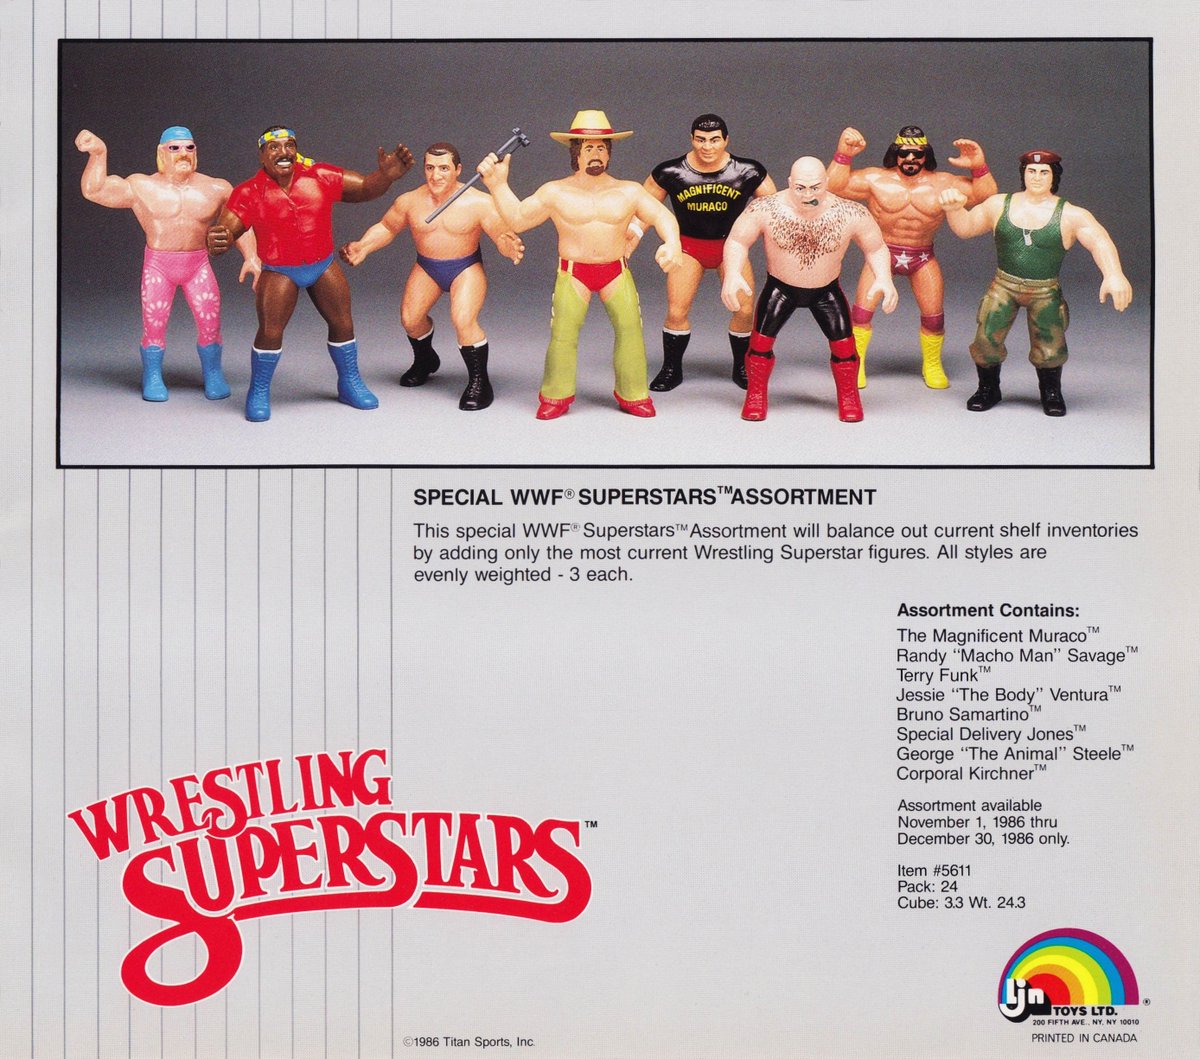 WWF Superstars Assortment from LJN! 🌟 #WWF #WWE #Wrestling #LJN #JesseVentura #SDJones #BrunoSammartino #TerryFunk #DonMuraco #GeorgeSteele #RandySavage #CorporalKirchner